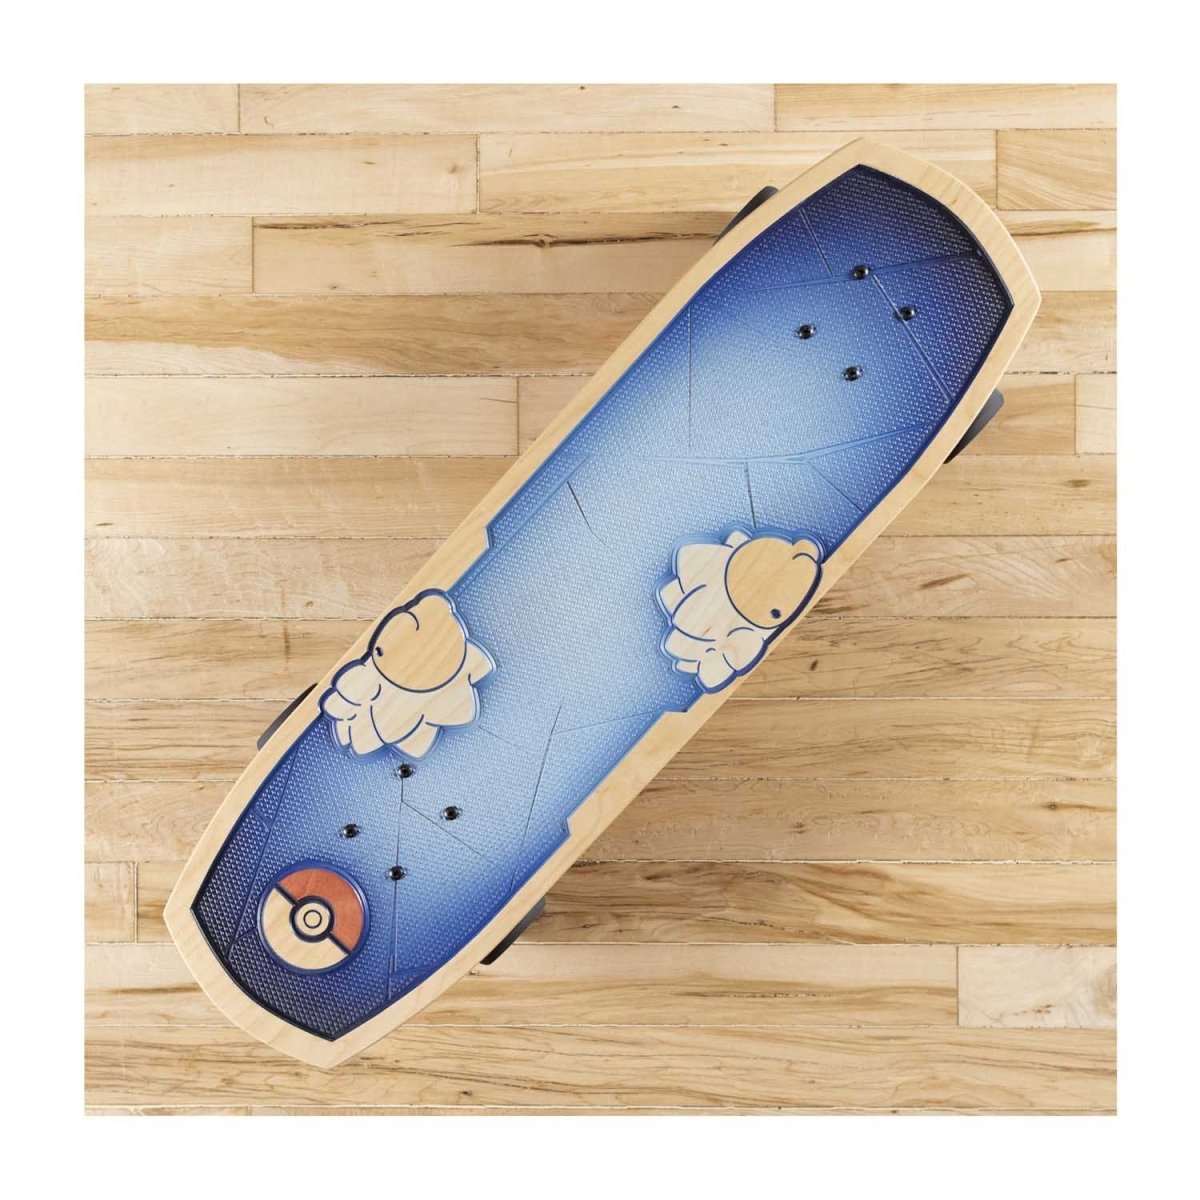 Pokémon Center × Bear Walker: Mewtwo Skateboard